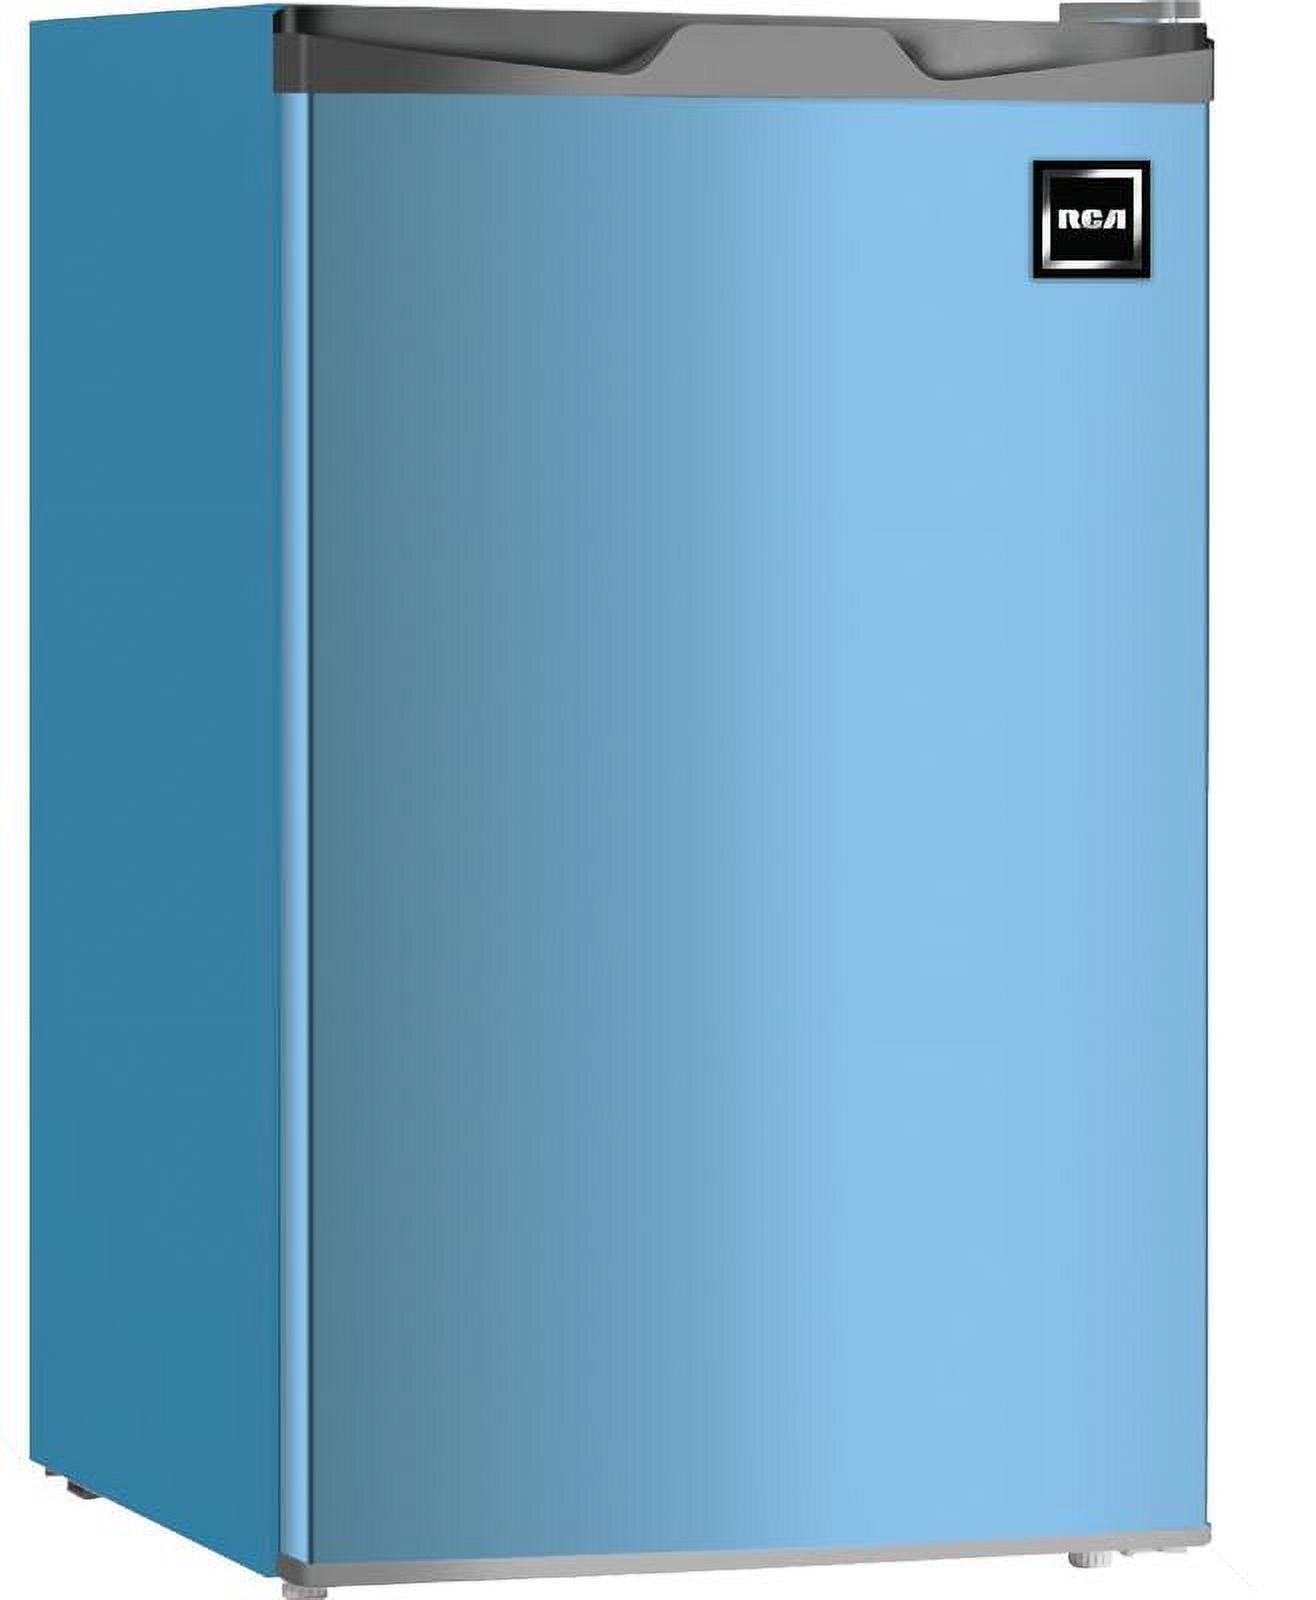 RCA 3.2 Cu. Ft. Single Door Compact Refrigerator RFR320, Blue - image 1 of 5